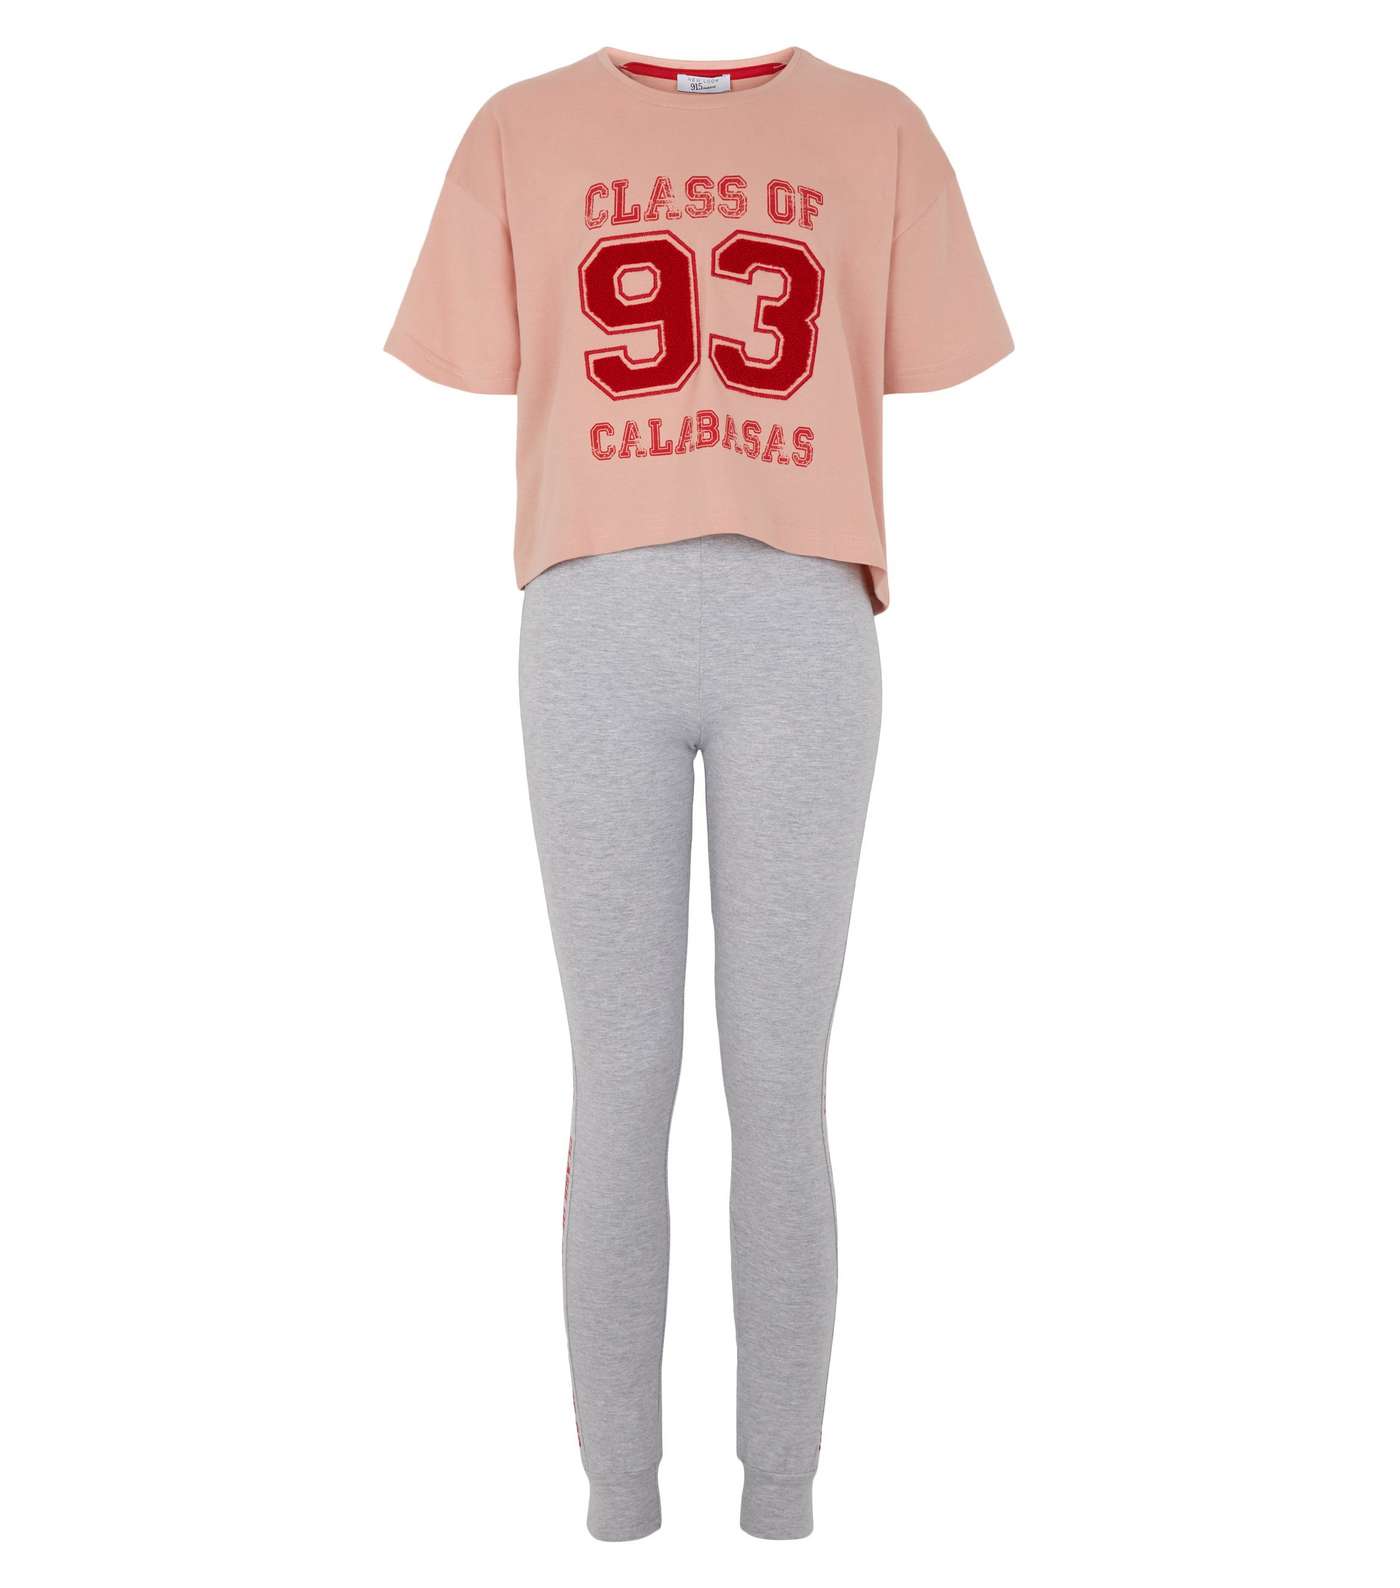 Girls Pink Class Of 93 Slogan Pyjama Set Image 4